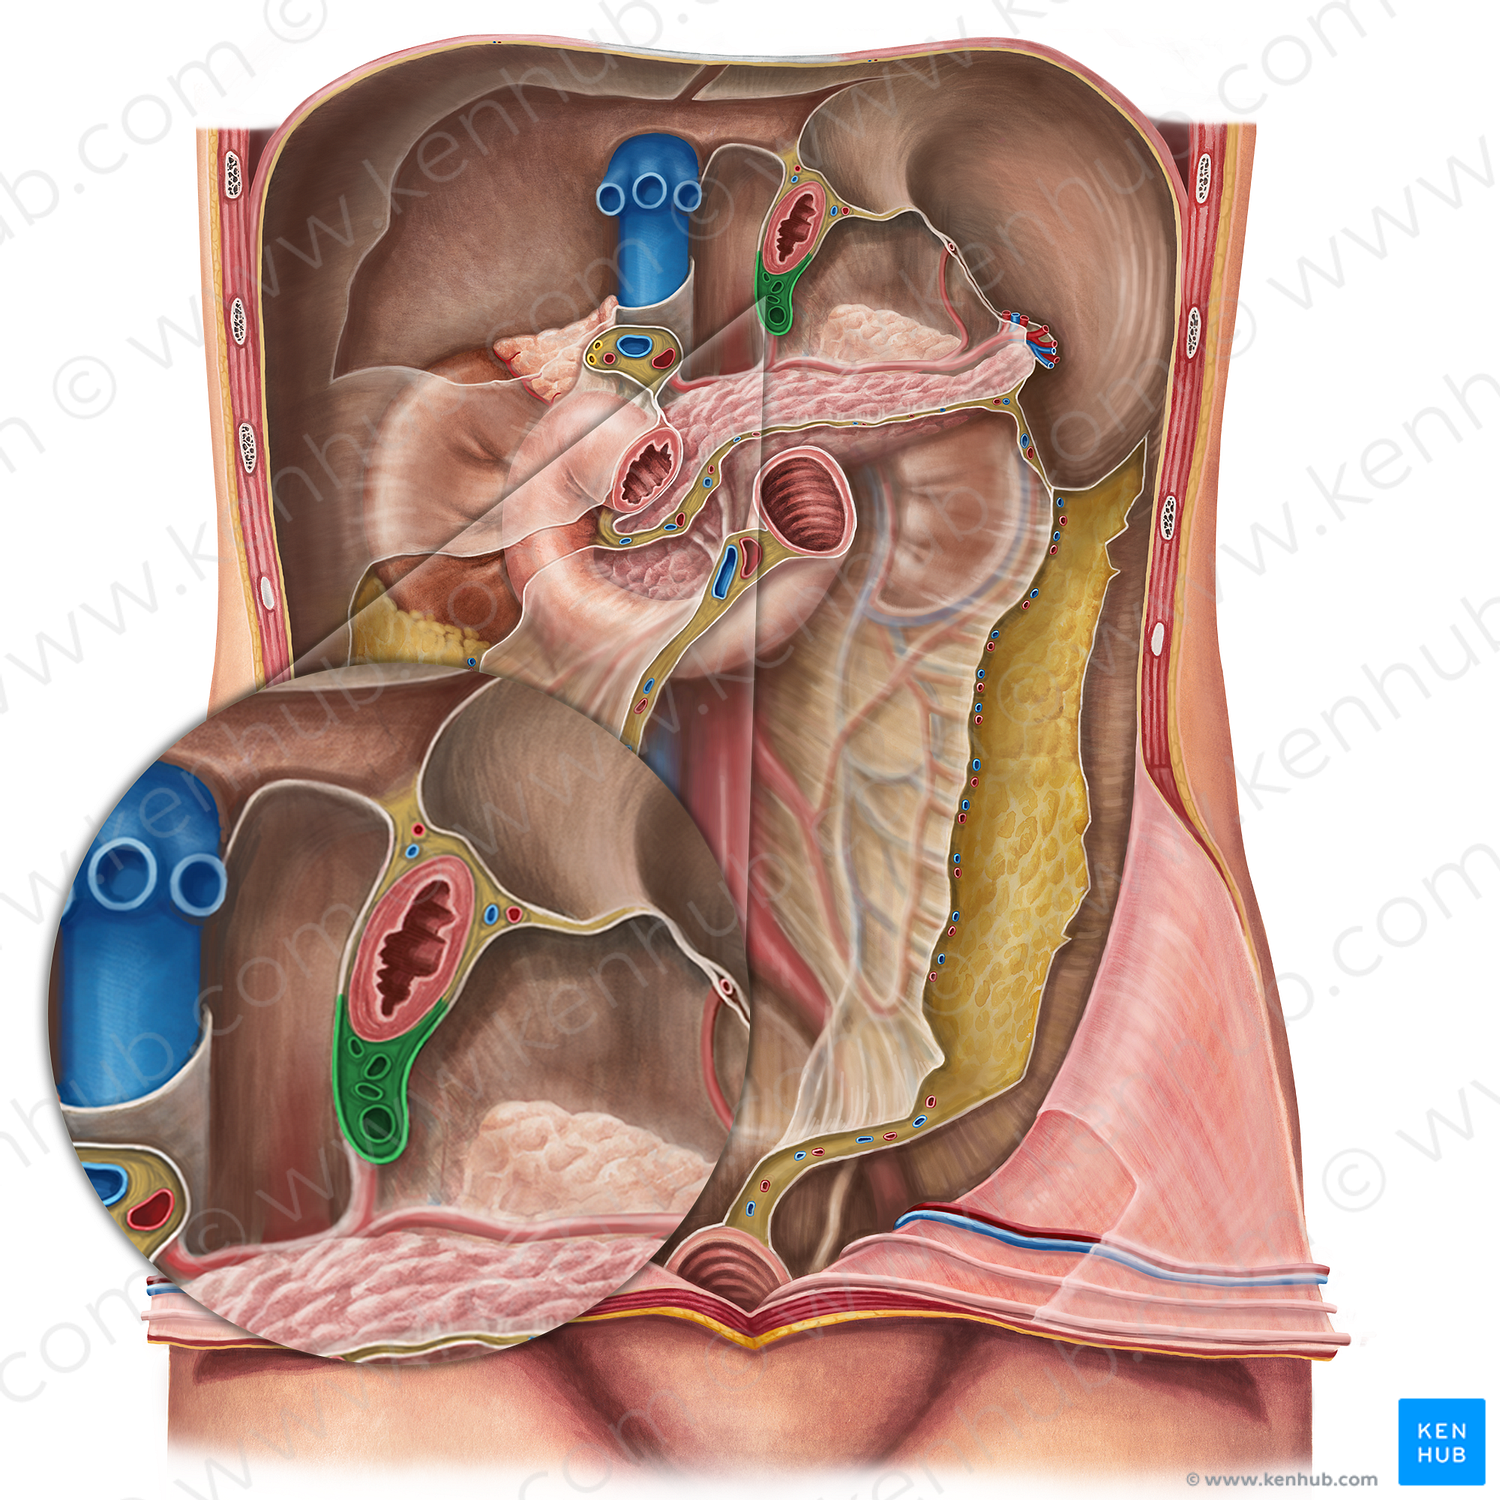 Gastropancreatic fold (#21641)